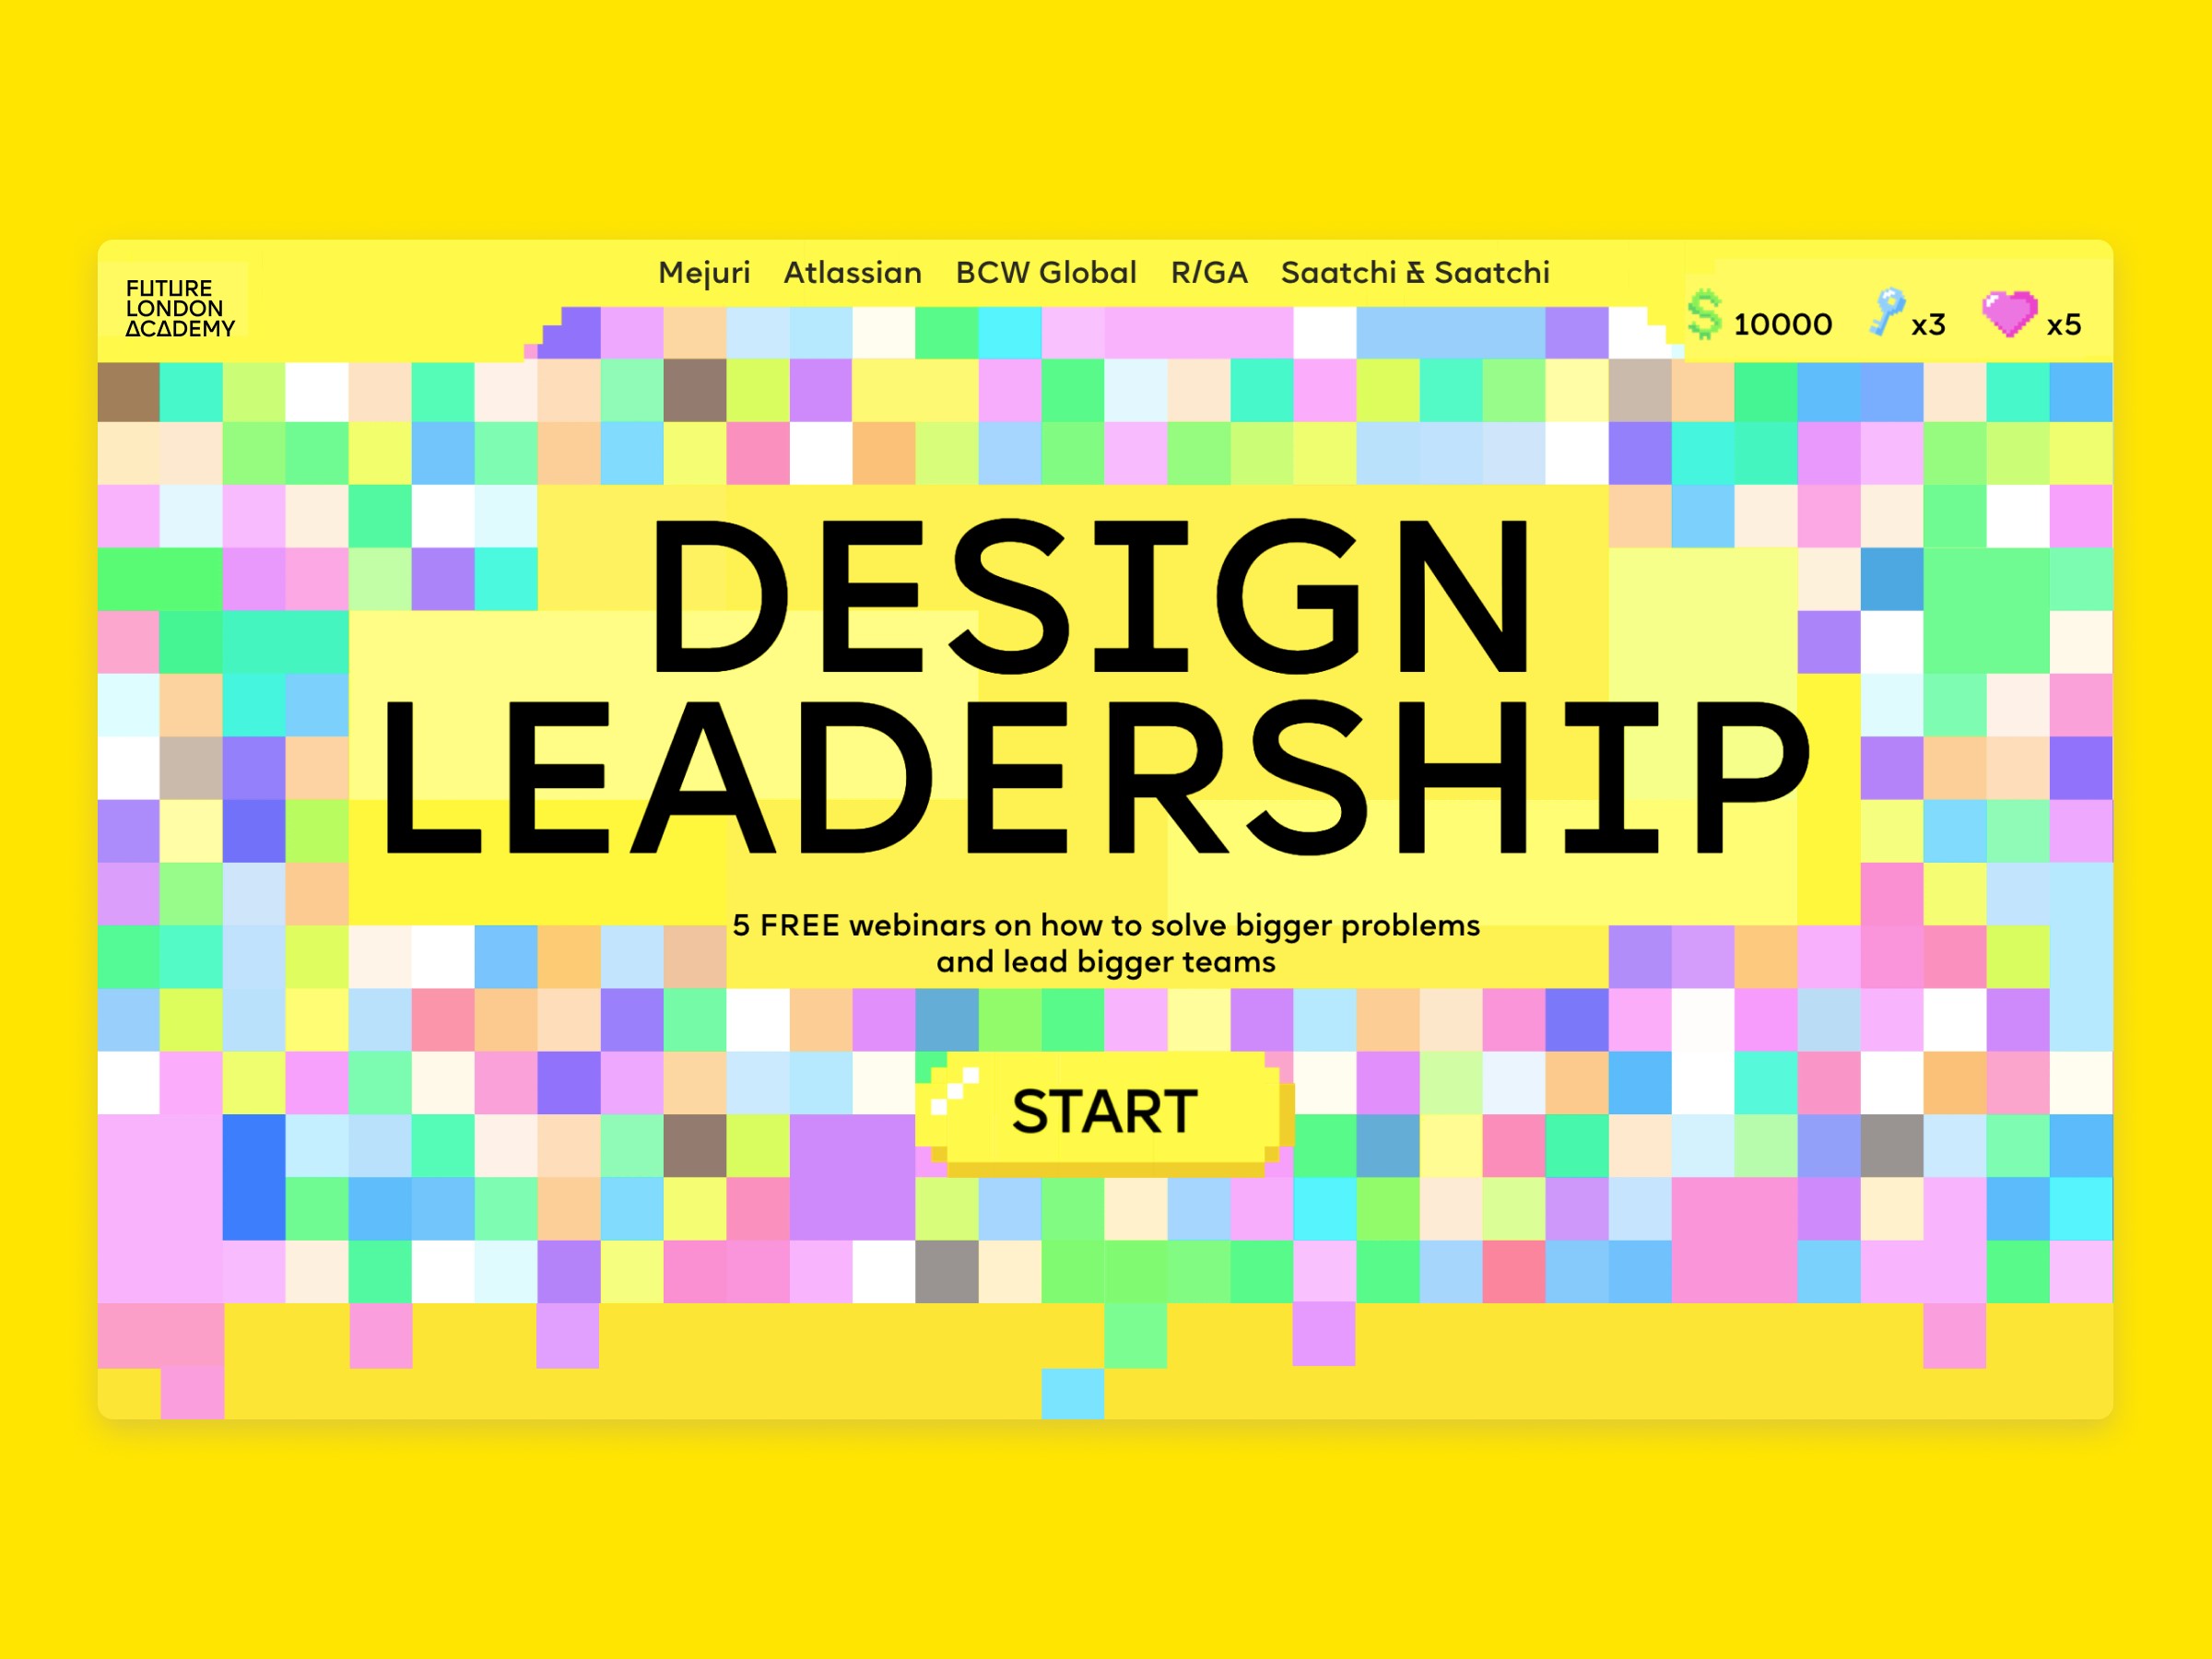 Design Leadrship Webinar Series by Future London Academy